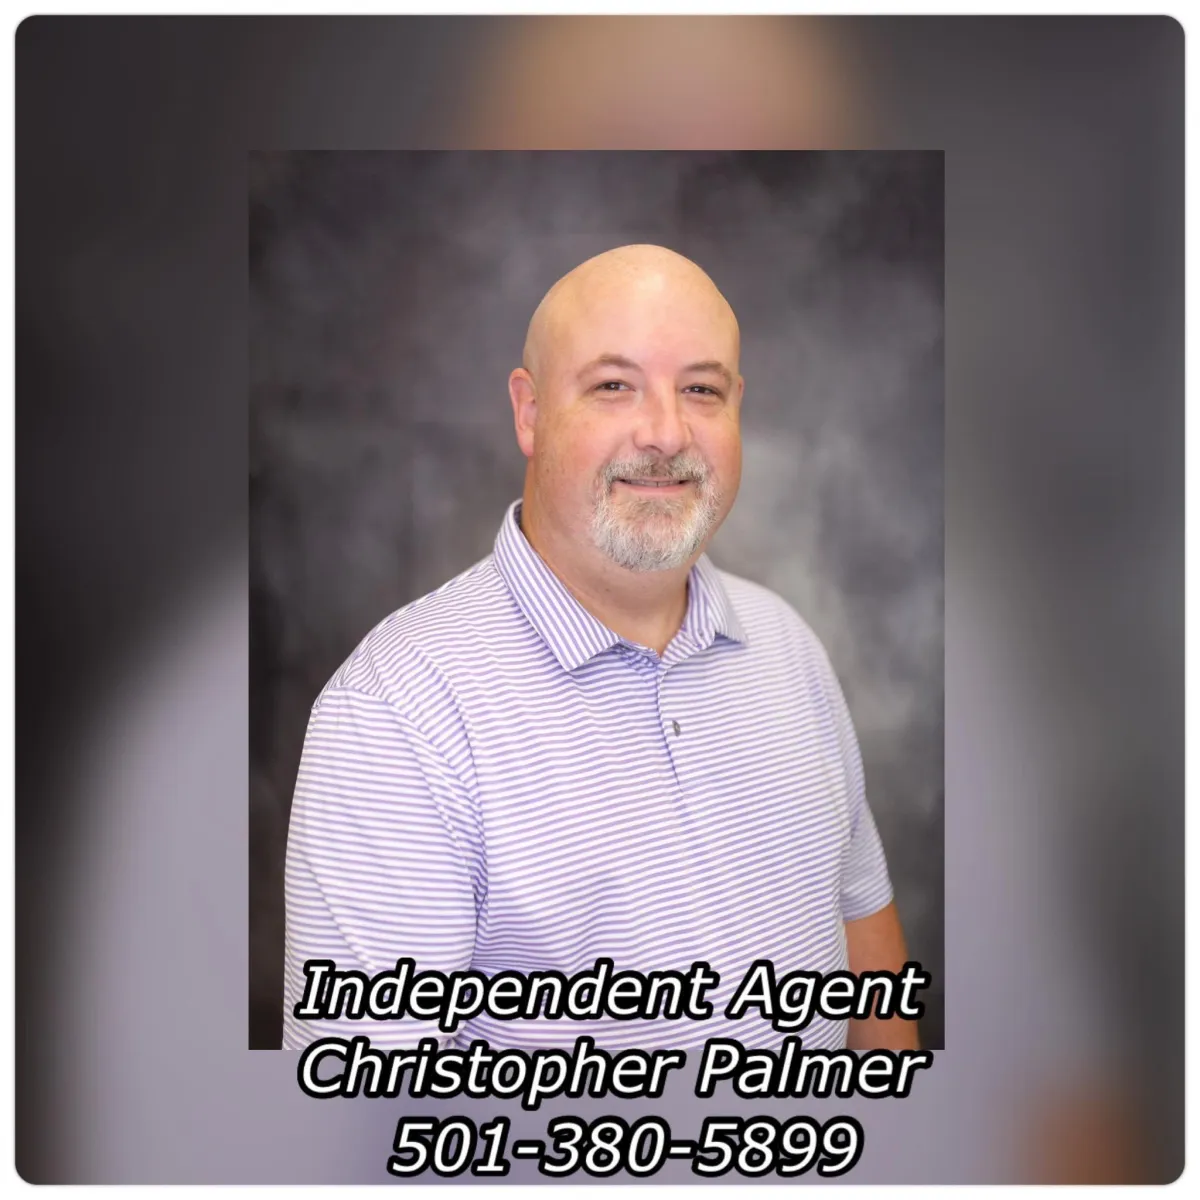 Jonesboro Arkansas Local Medicare Insurance Agent Christopher Palmer